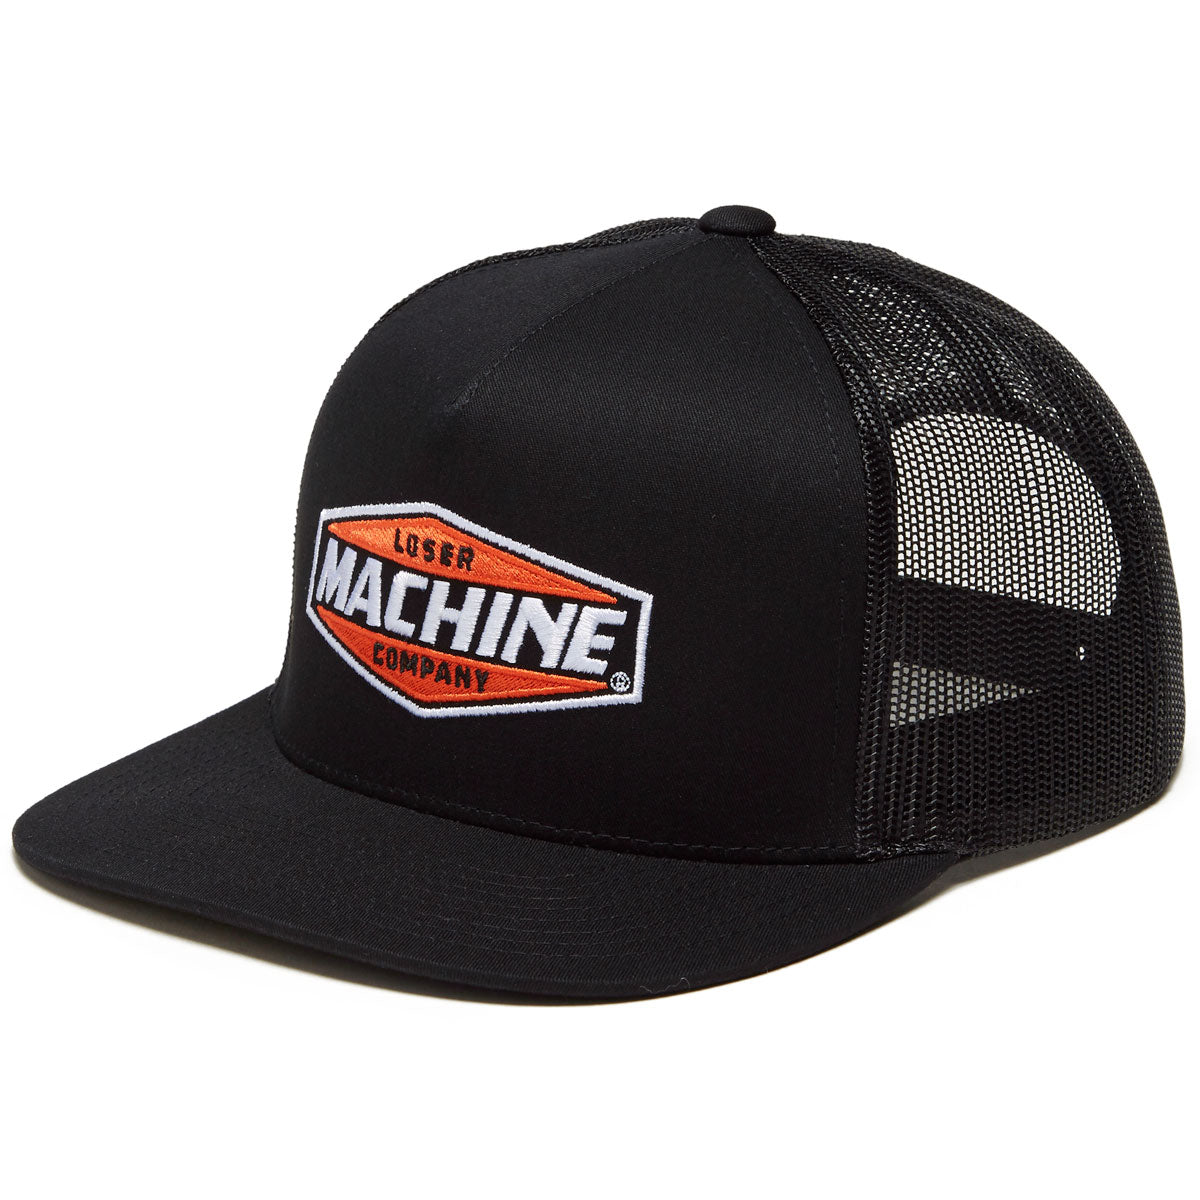 Loser Machine Thomas Hat - Black image 1